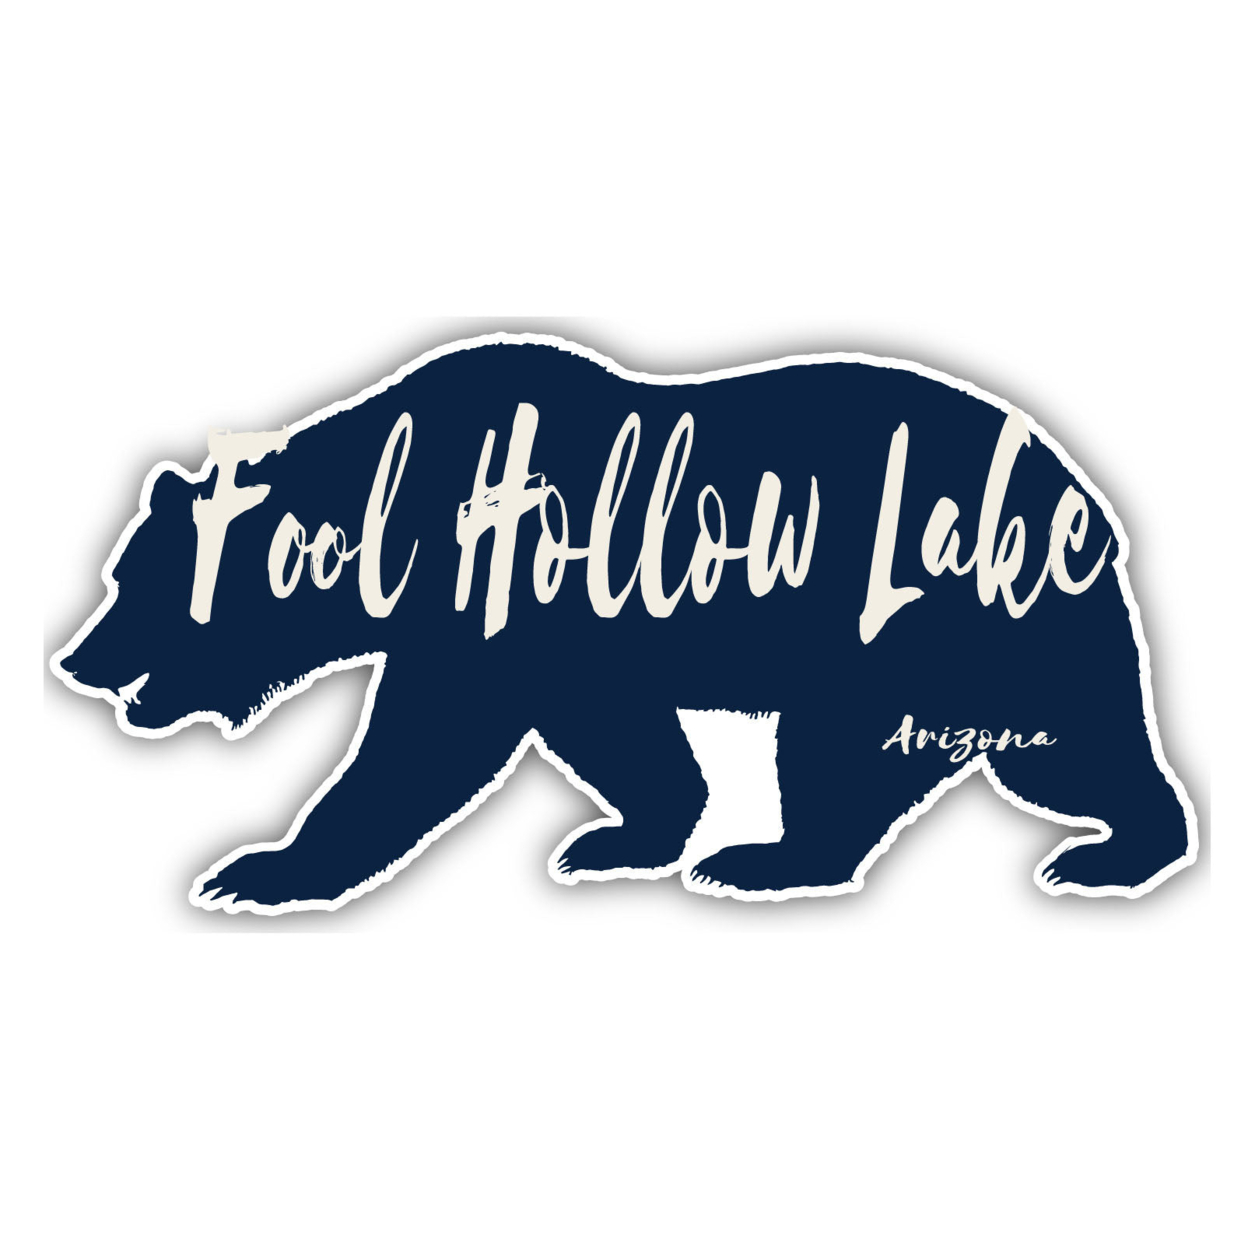 Fool Hollow Lake Arizona Souvenir Decorative Stickers (Choose Theme And Size) - Single Unit, 2-Inch, Camp Life